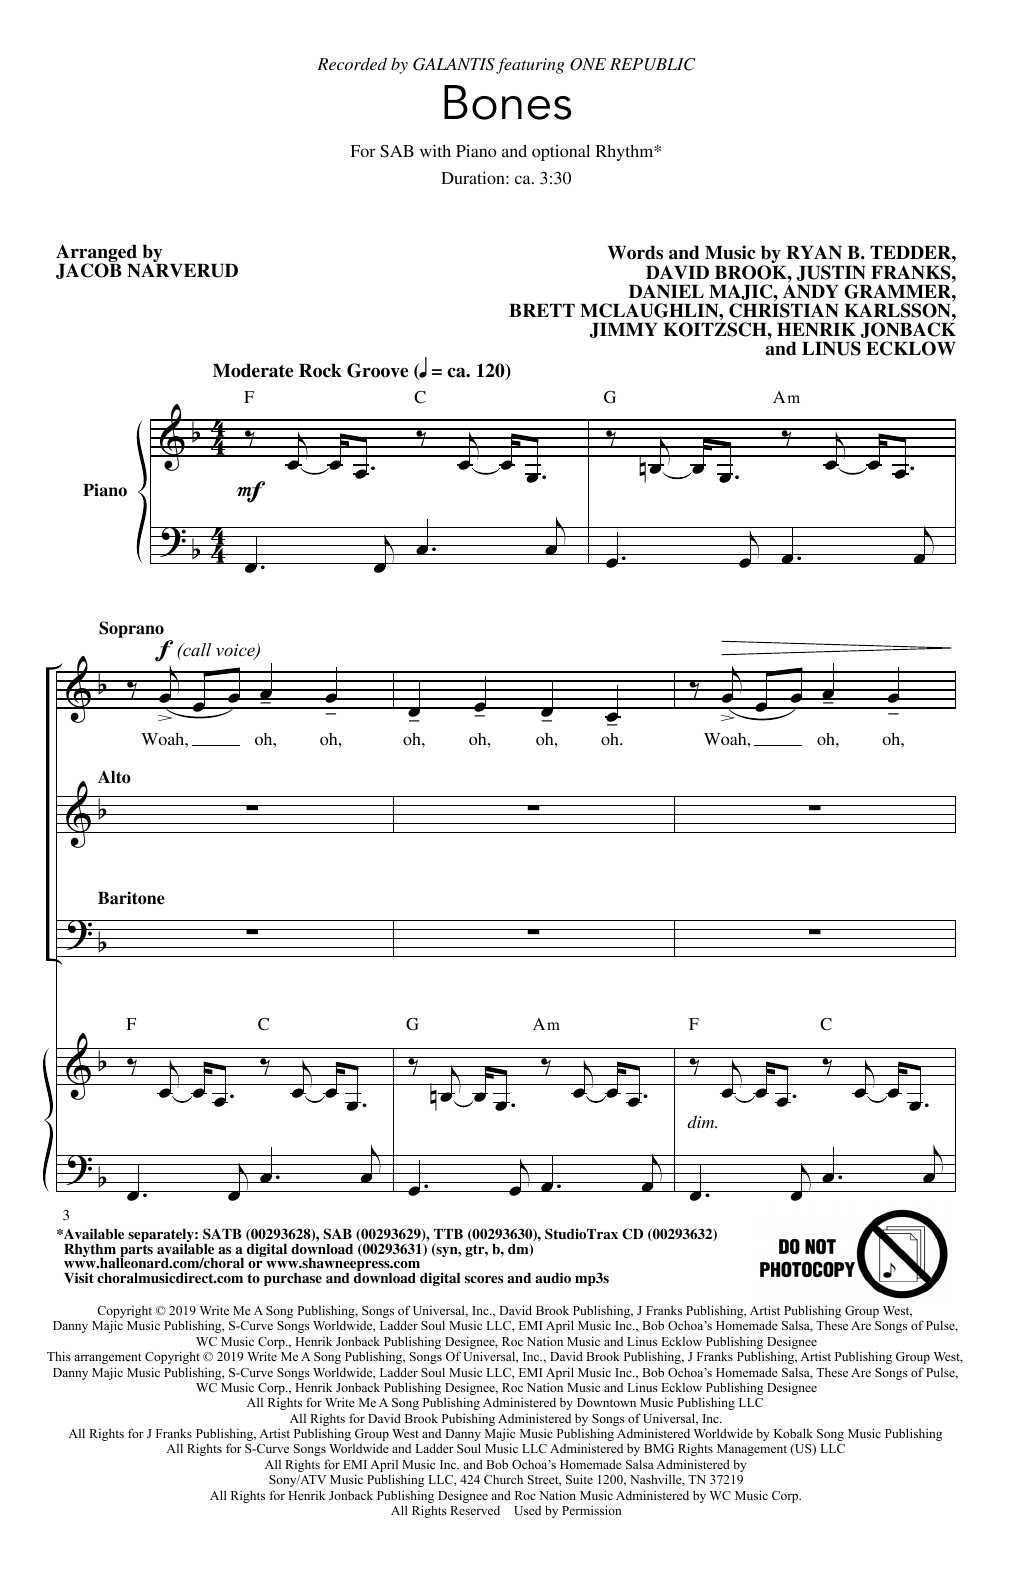 Galantis Bones (feat. OneRepublic) (arr. Jacob Narverud) sheet music notes and chords arranged for SATB Choir